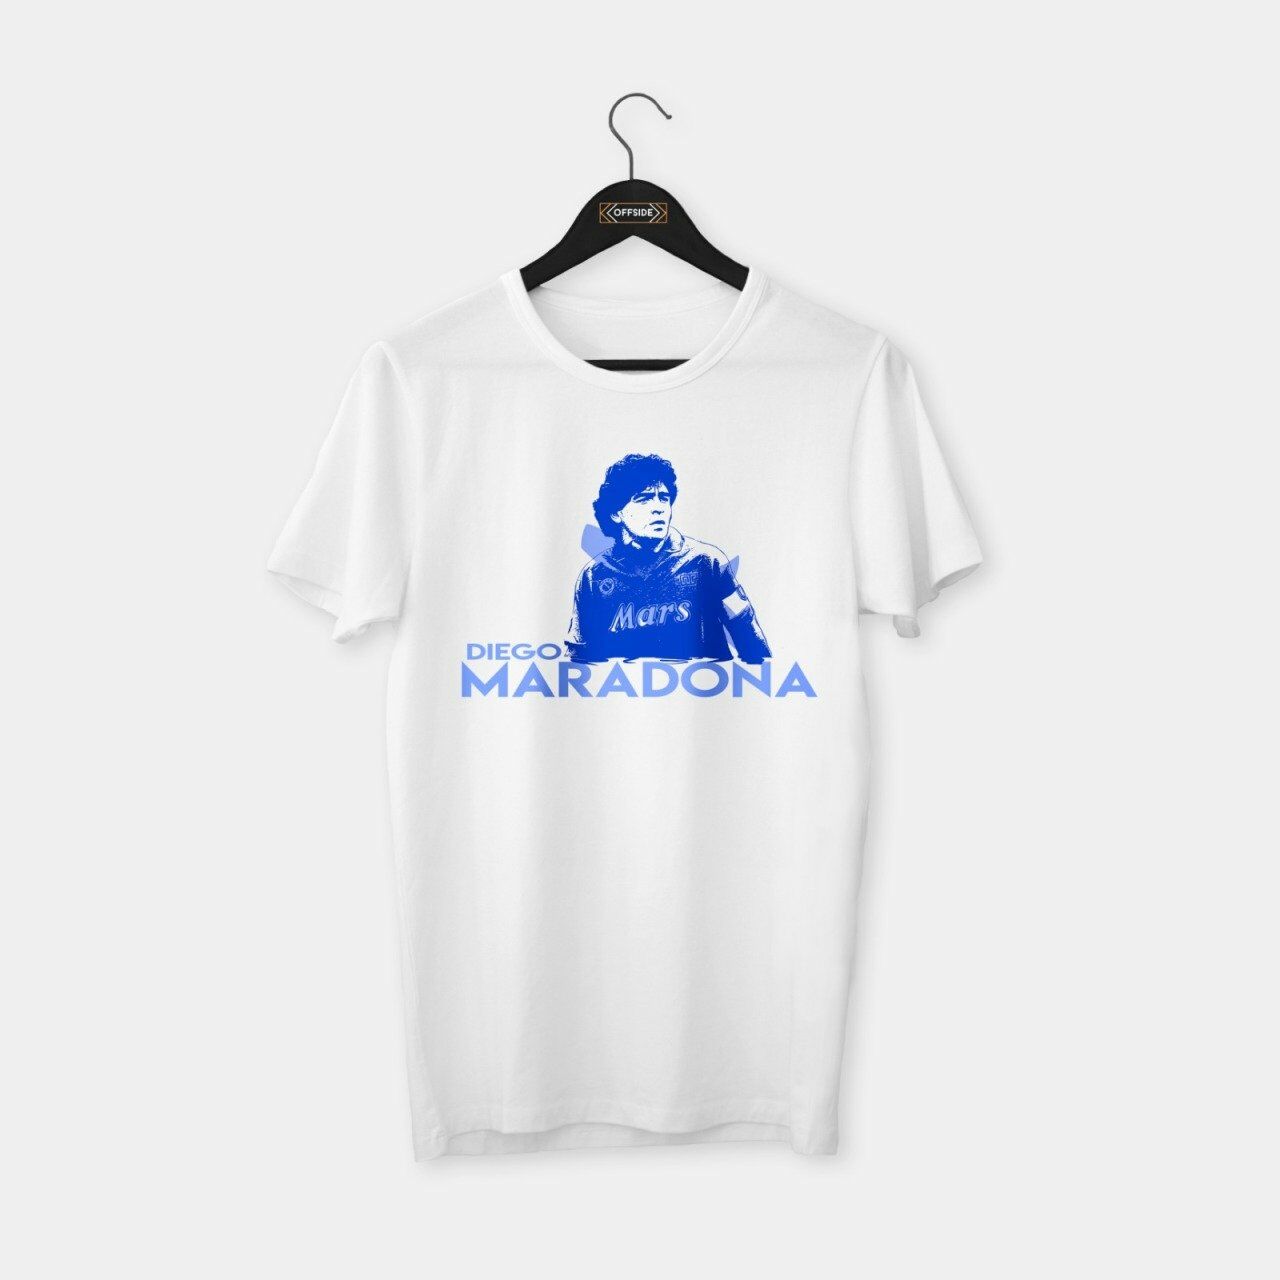 Maradona (Napoli) T-shirt